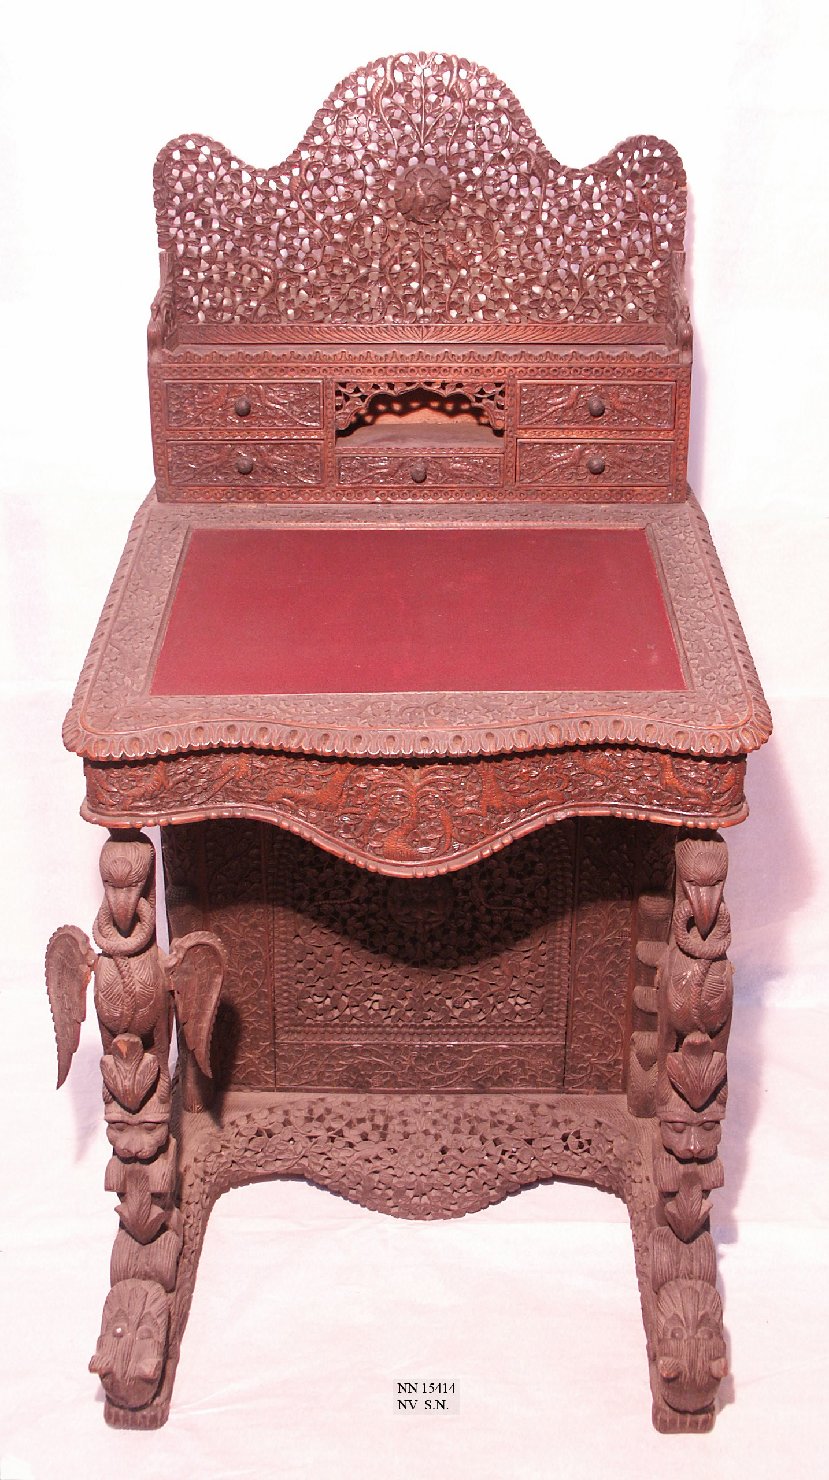 motivi decorativi vegetali e animali (scrittoio, opera isolata) - manifattura birmana (sec. XIX)